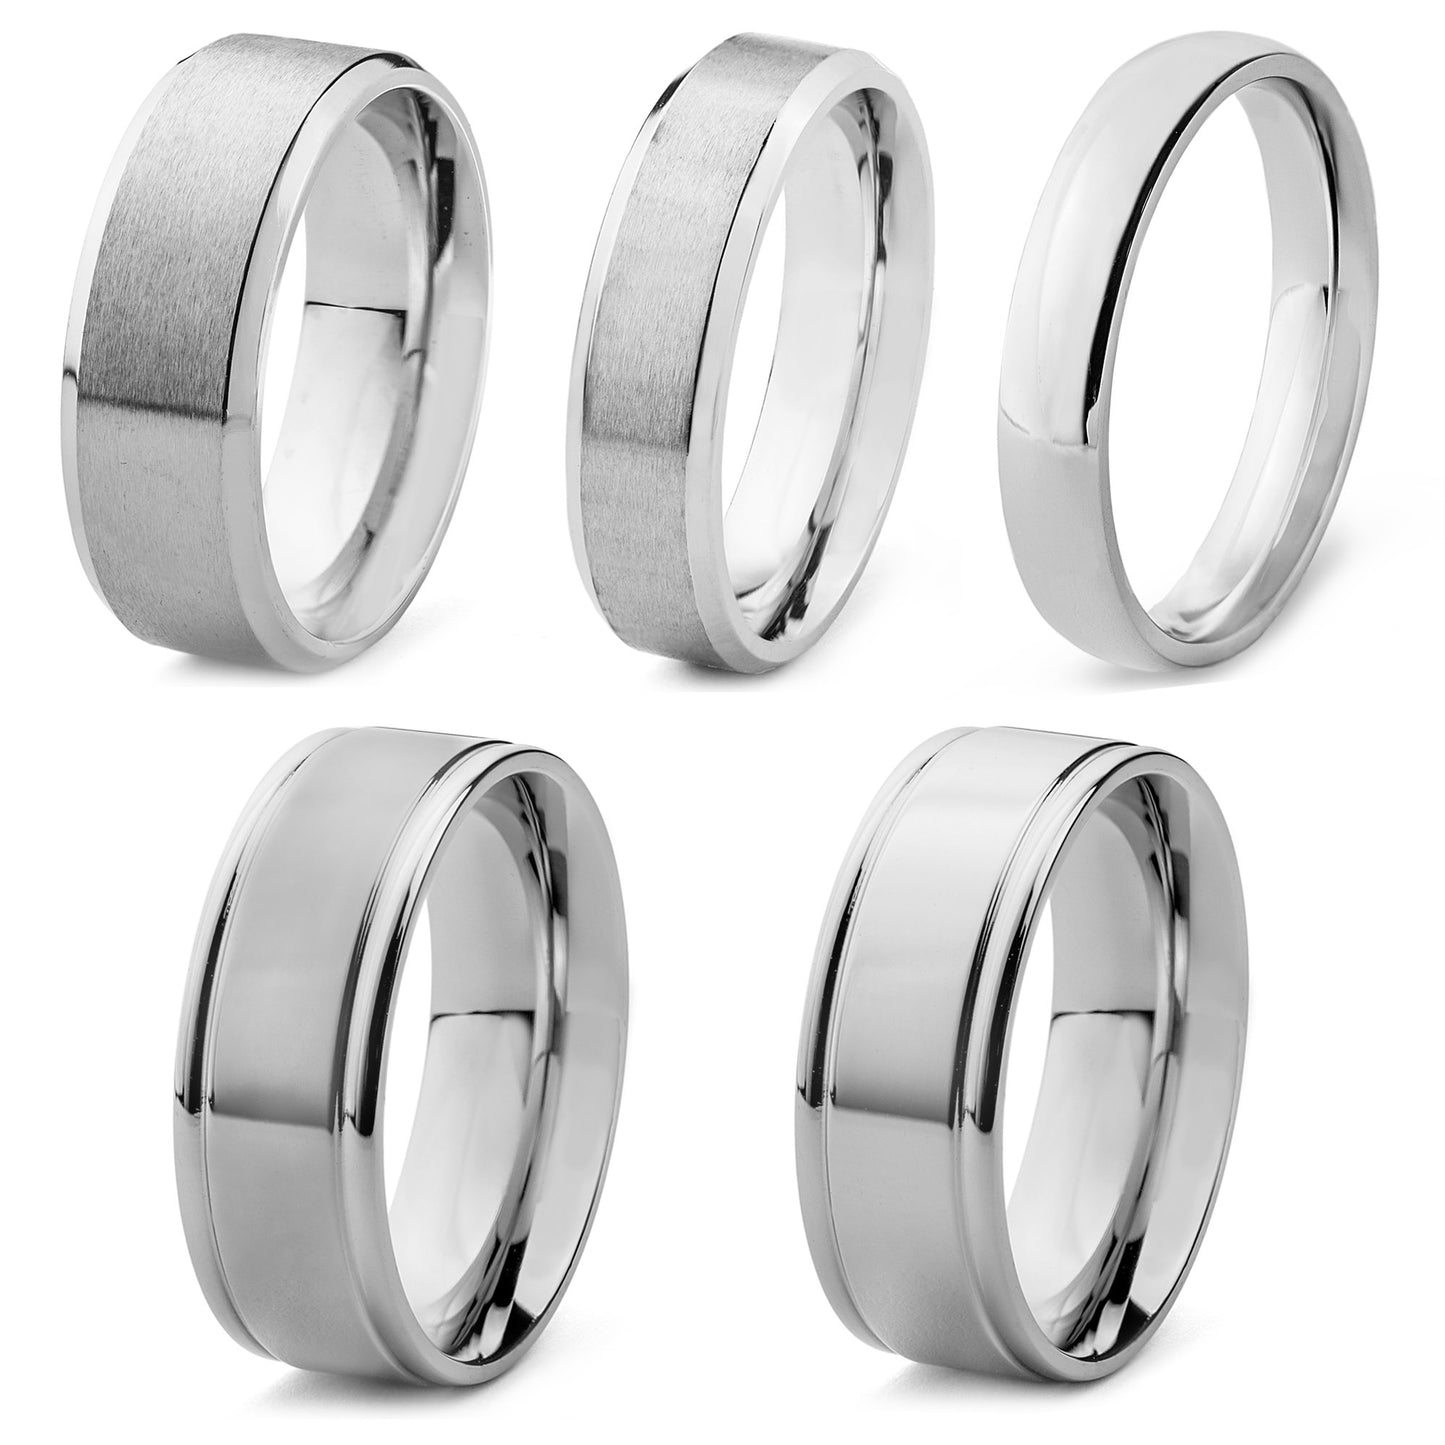 Men's 60 Piece 5 Styles Best Selling Steel Variety Ring Pack